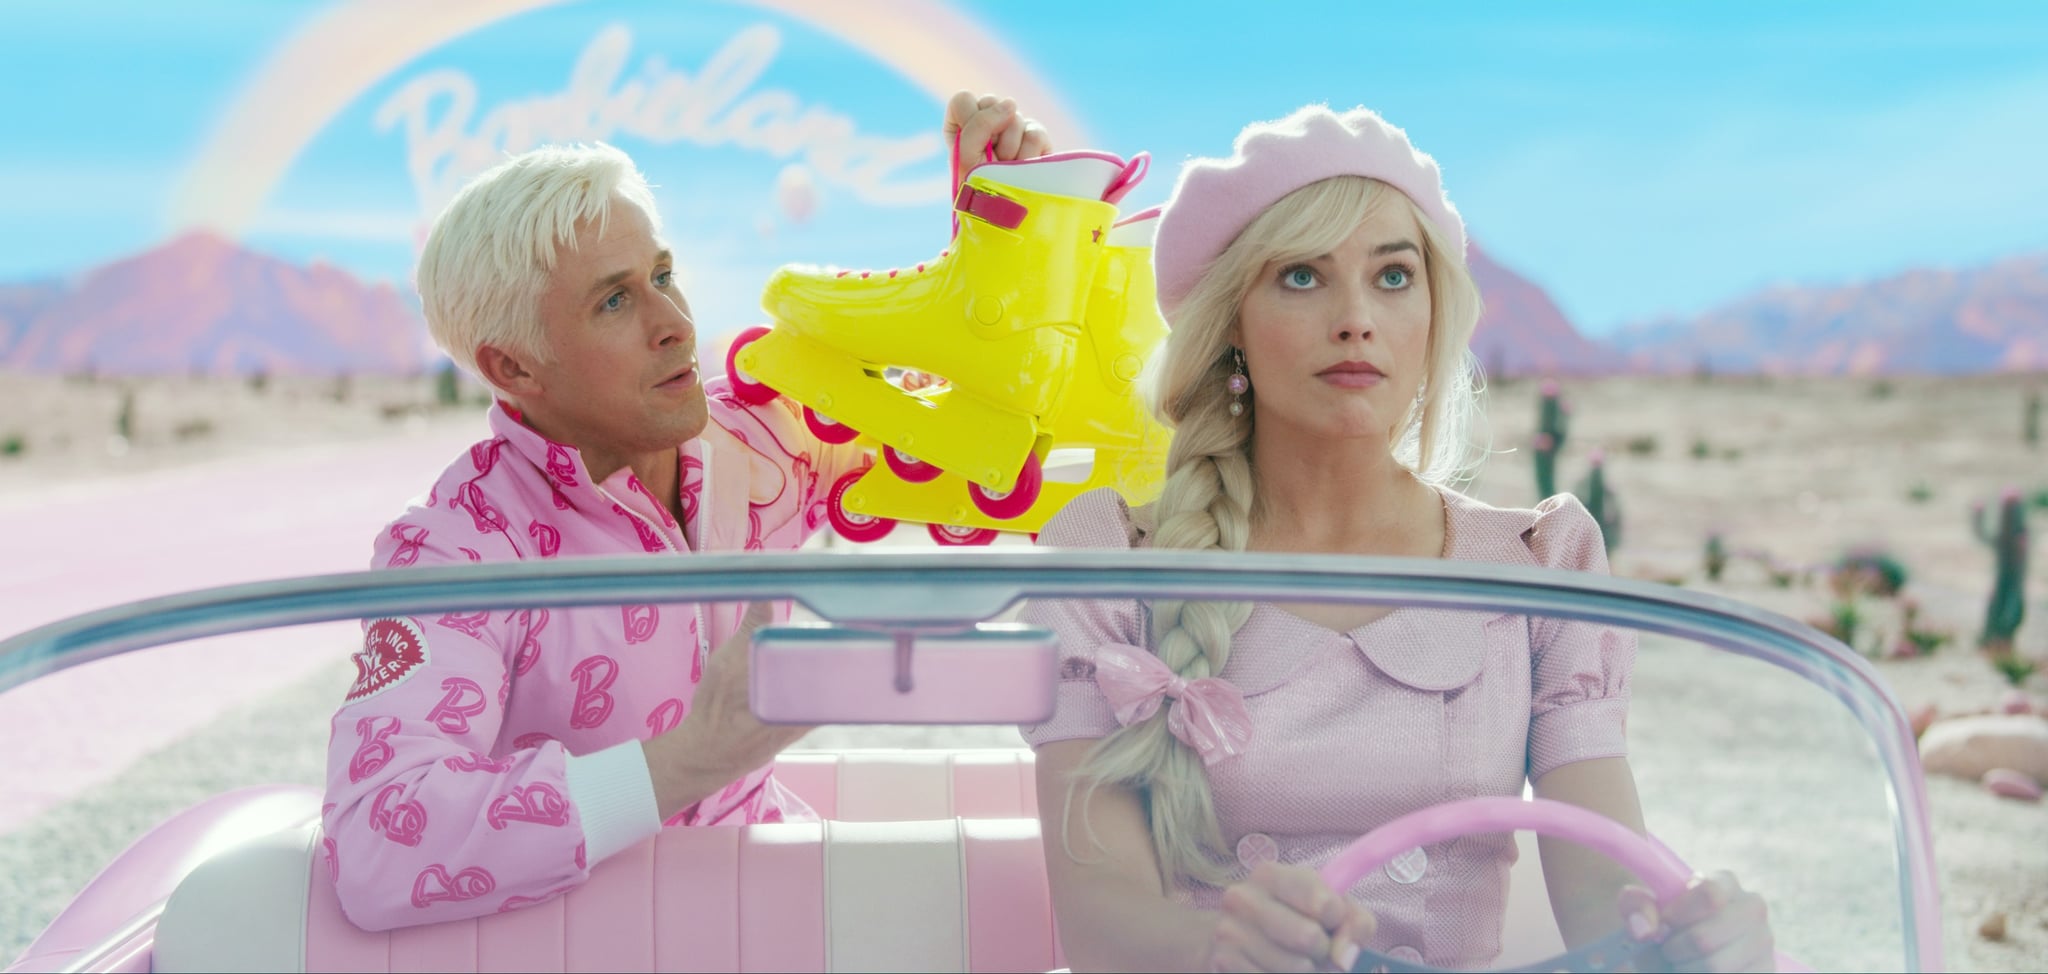  Ryan Gosling as Ken, Margot Robbie as Barbie, 2023.  Warner Bros. / Courtesy Everett Collection